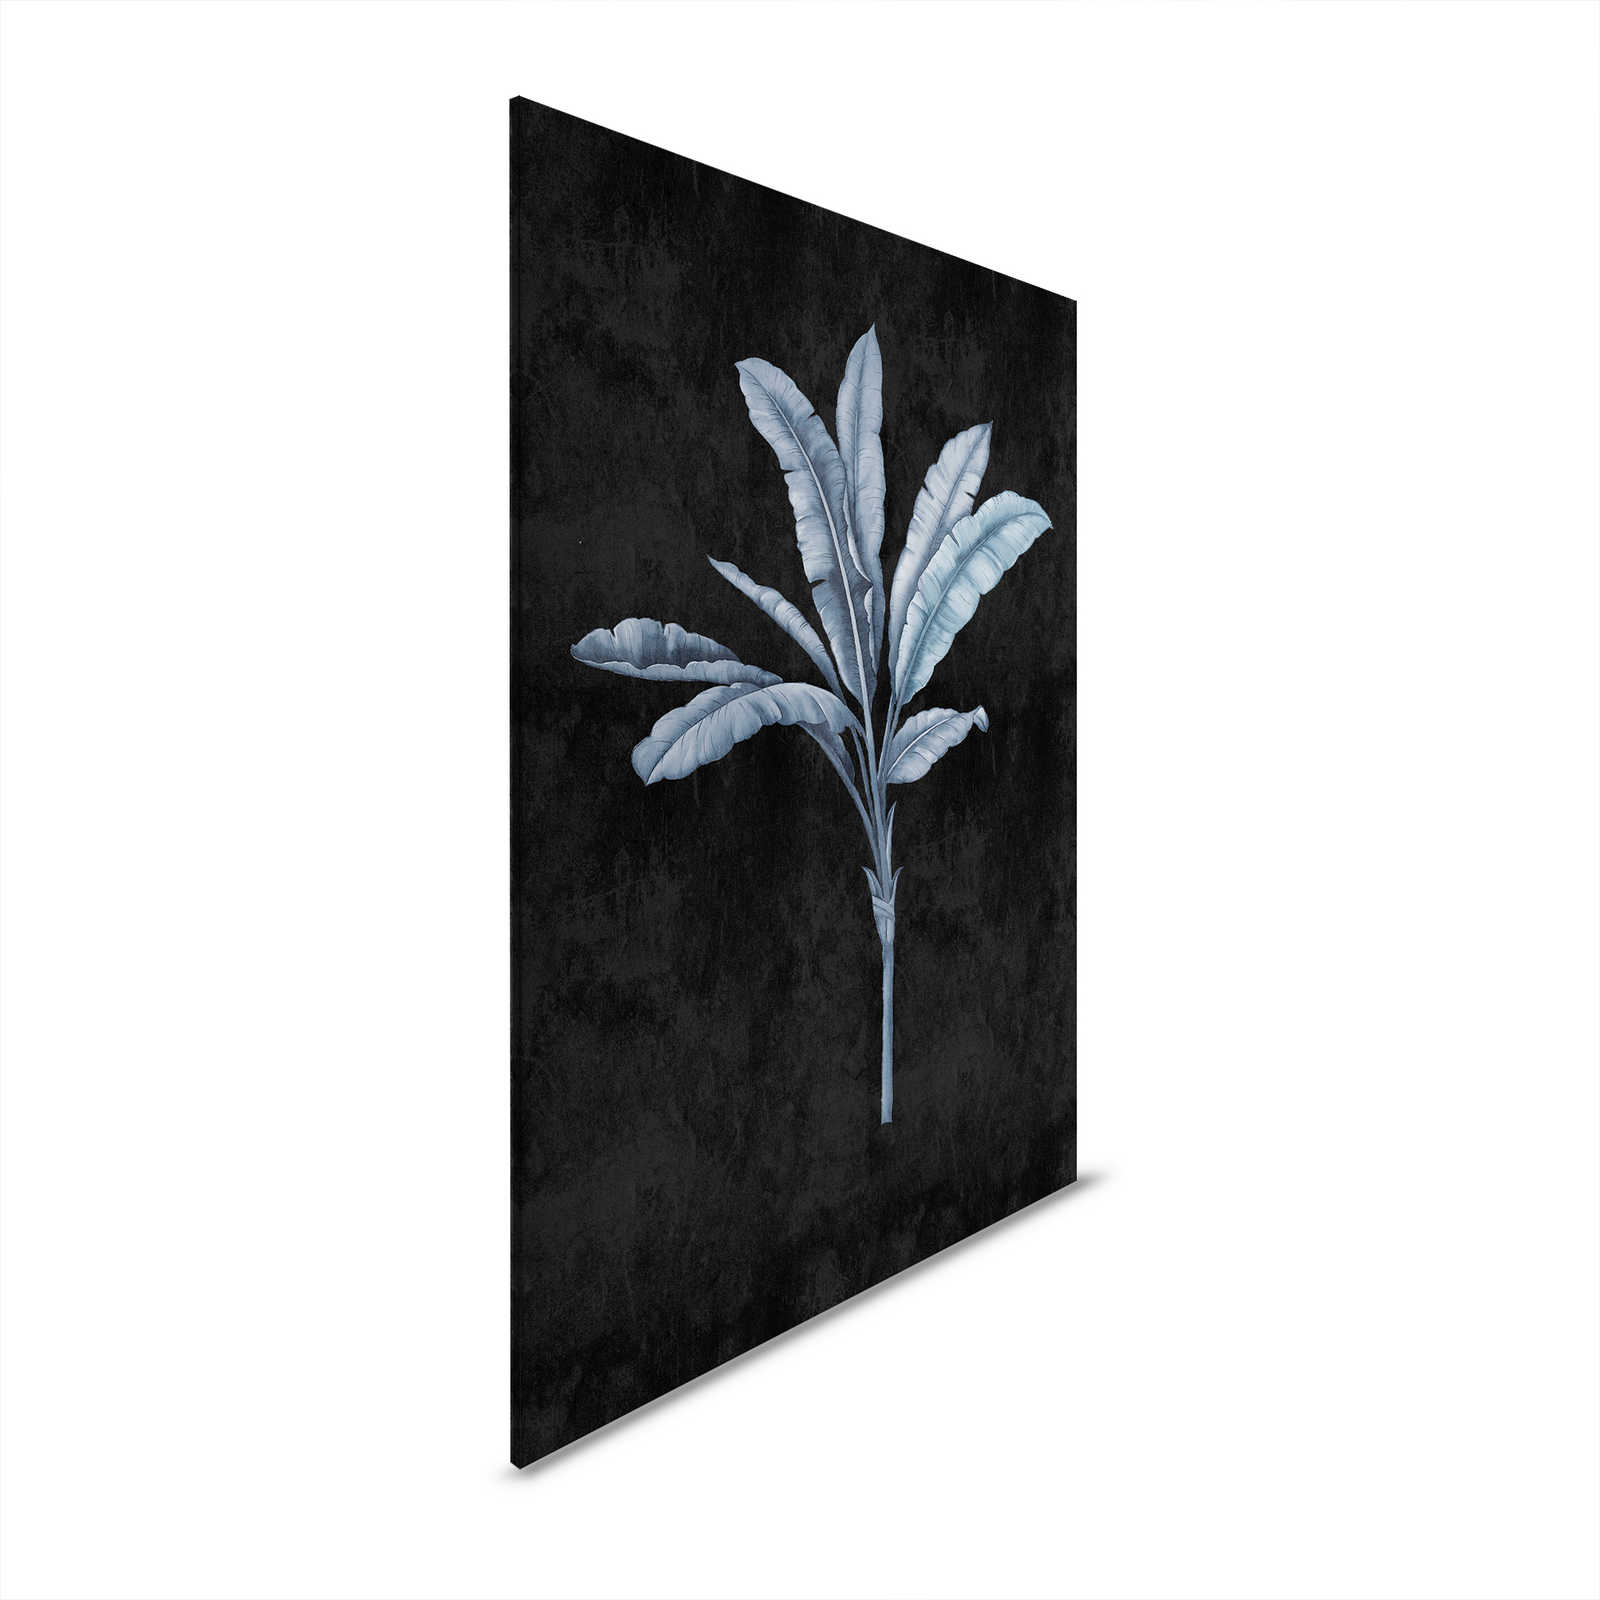 Fiji 2 - Canvas painting Black with Blue Grey Palm motif - 0.80 m x 1.20 m
